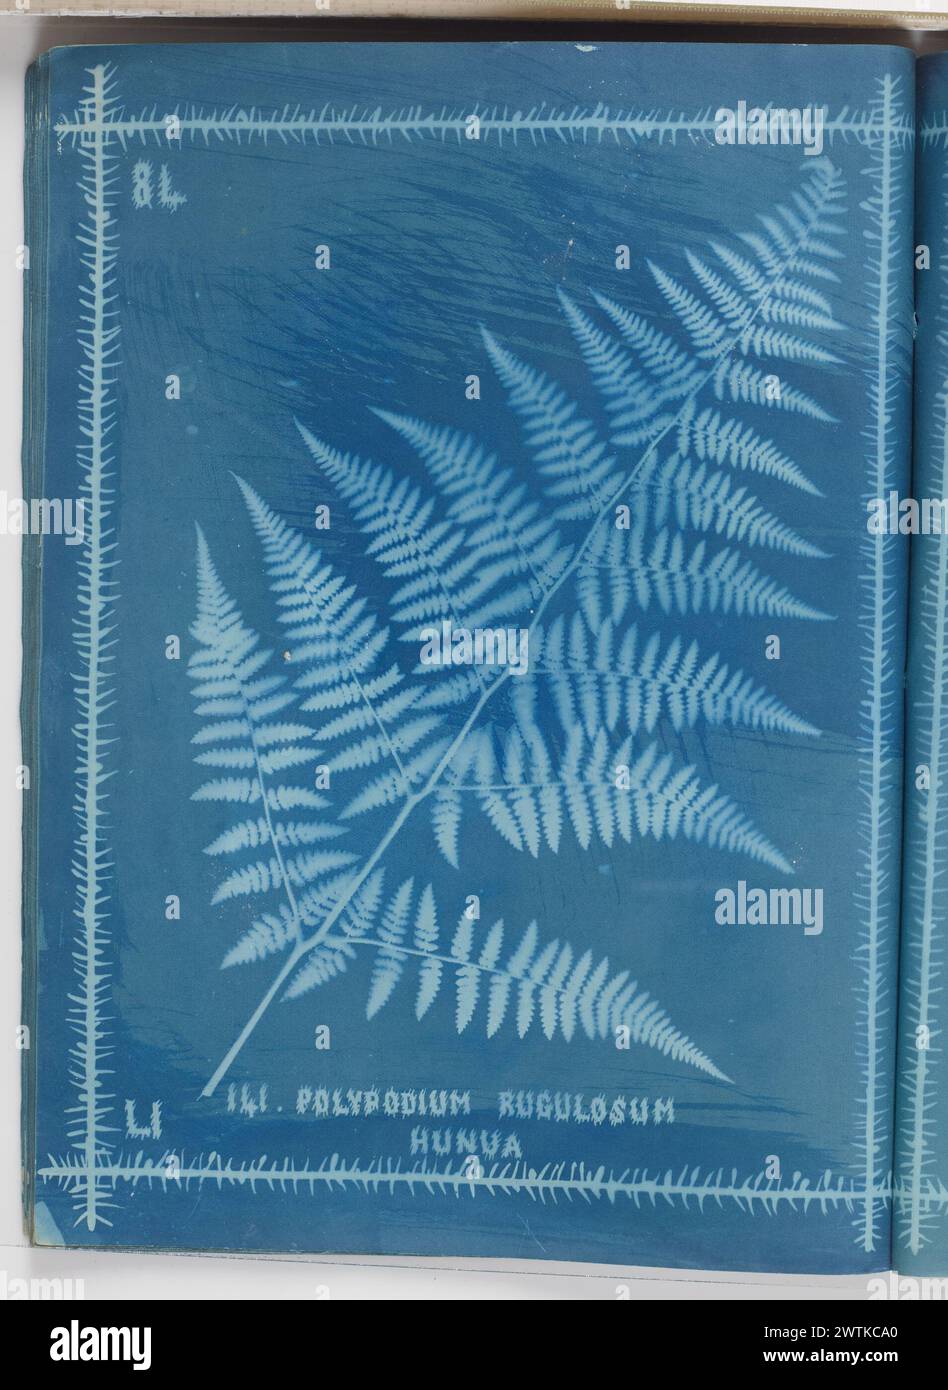 Polyrodium rugulosum, Hunua. From the album: New Zealand ferns. 172 varieties cyanotypes, photographic prints Stock Photo